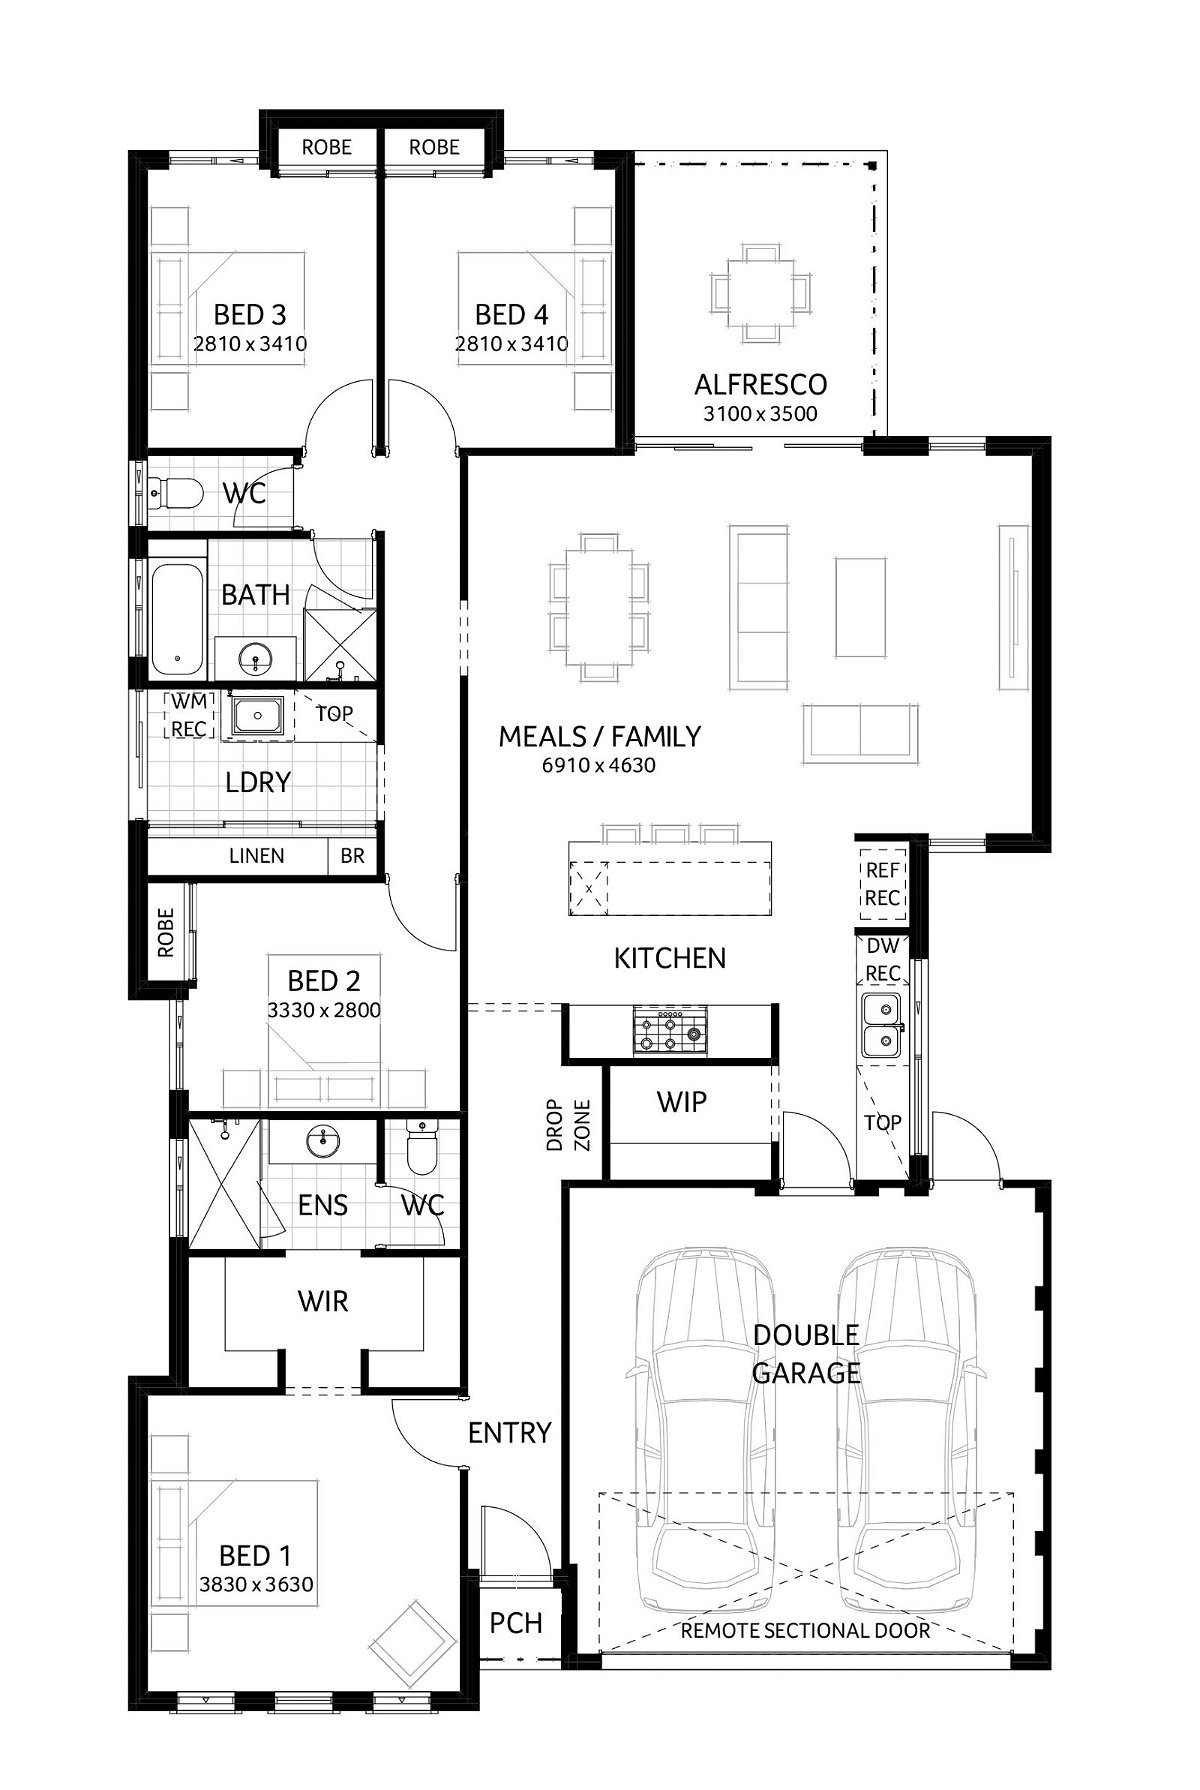 Plunkett Homes - Grevillea | Lifestyle - Floorplan - Grevillea Lifestyle Website Floorplan